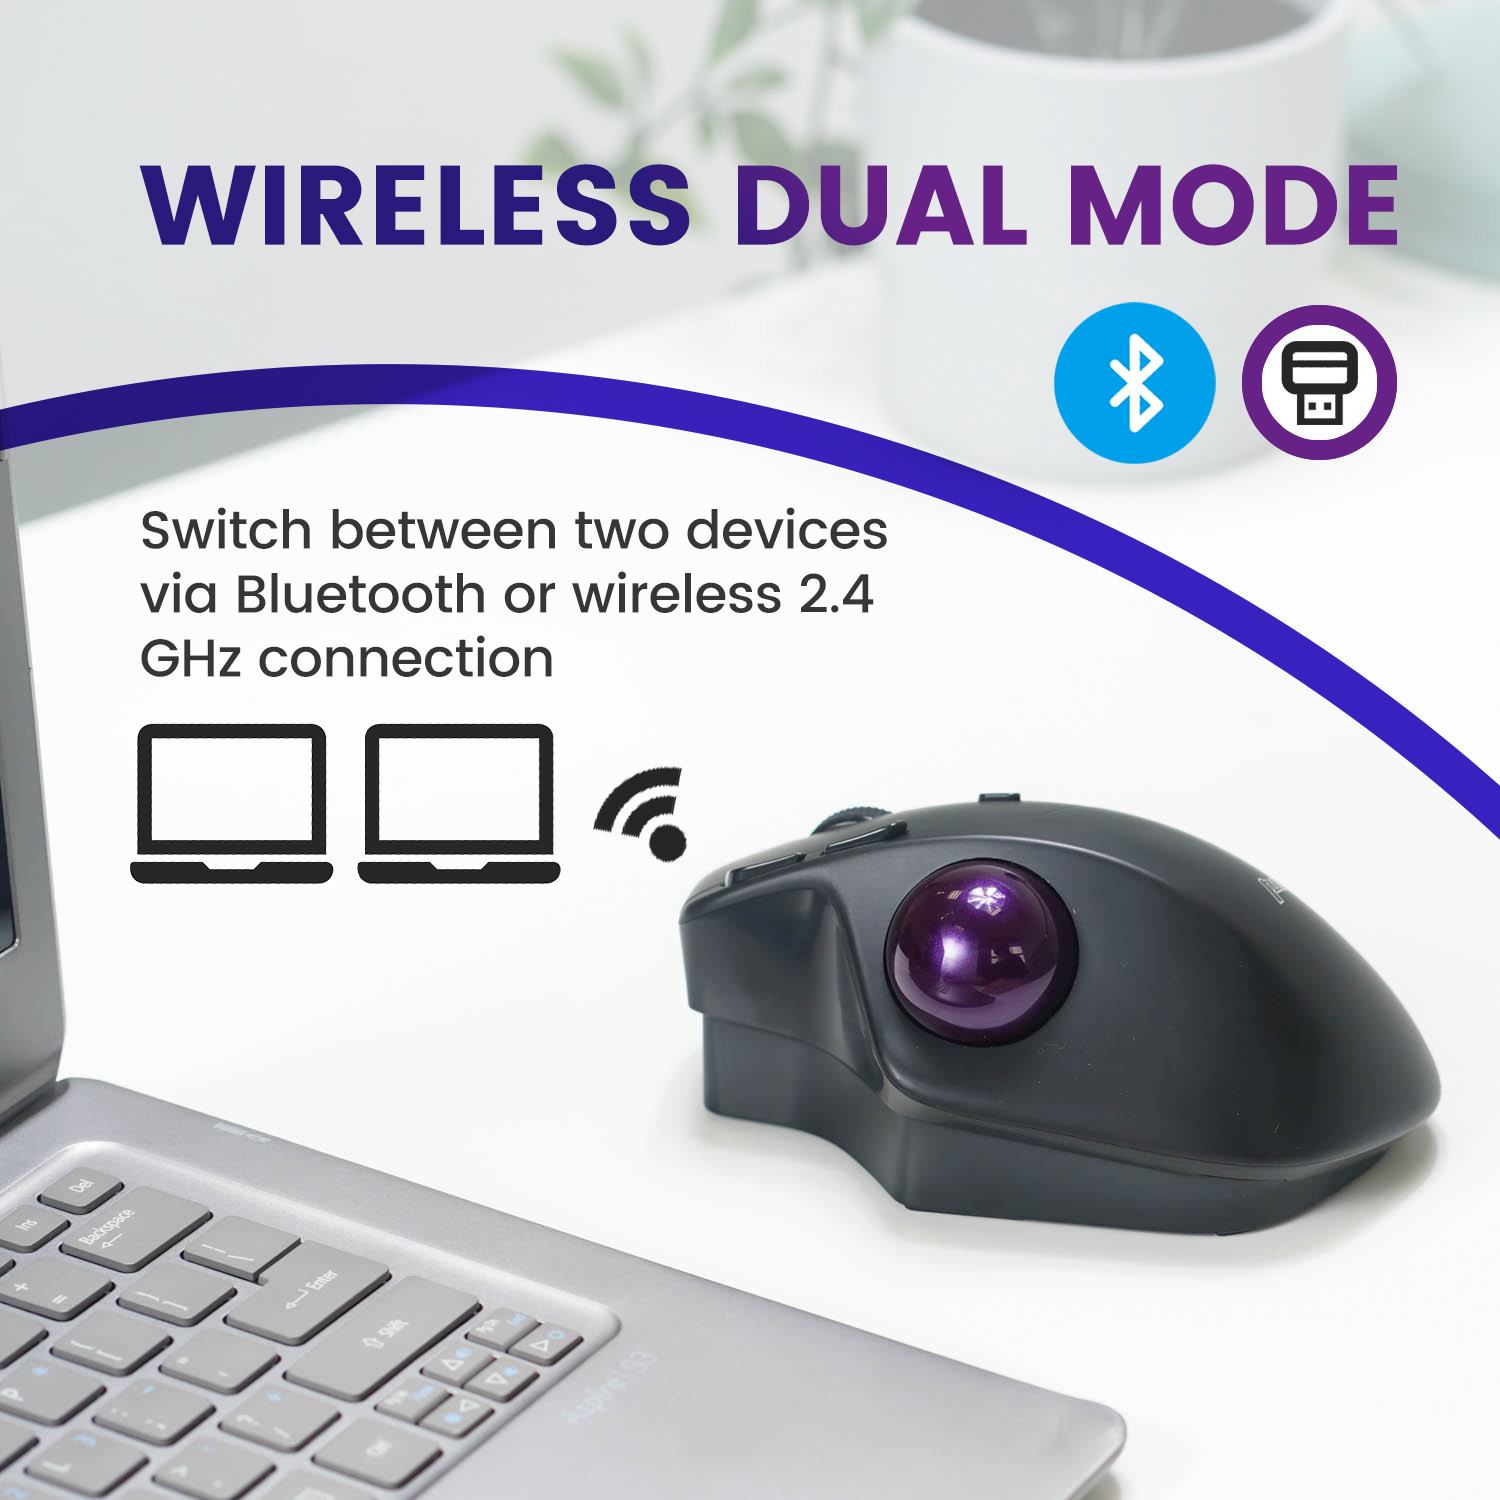 Dual Wireless Mode